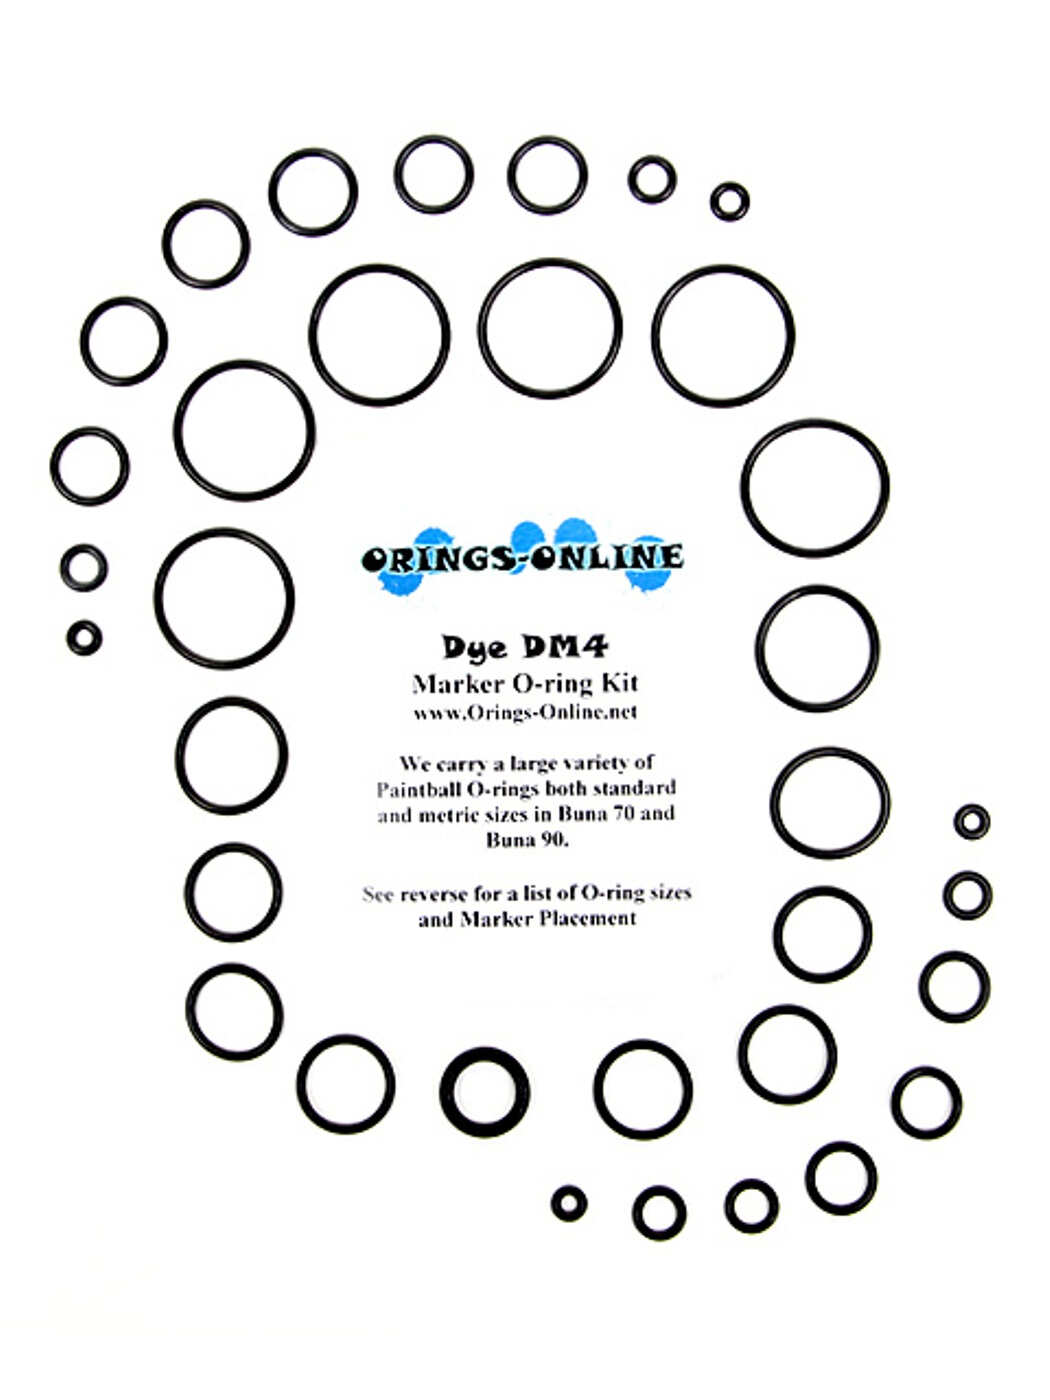 Smart Parts Nerve Paintball Marker O-ring Oring Kit x 4 rebuilds / kits -